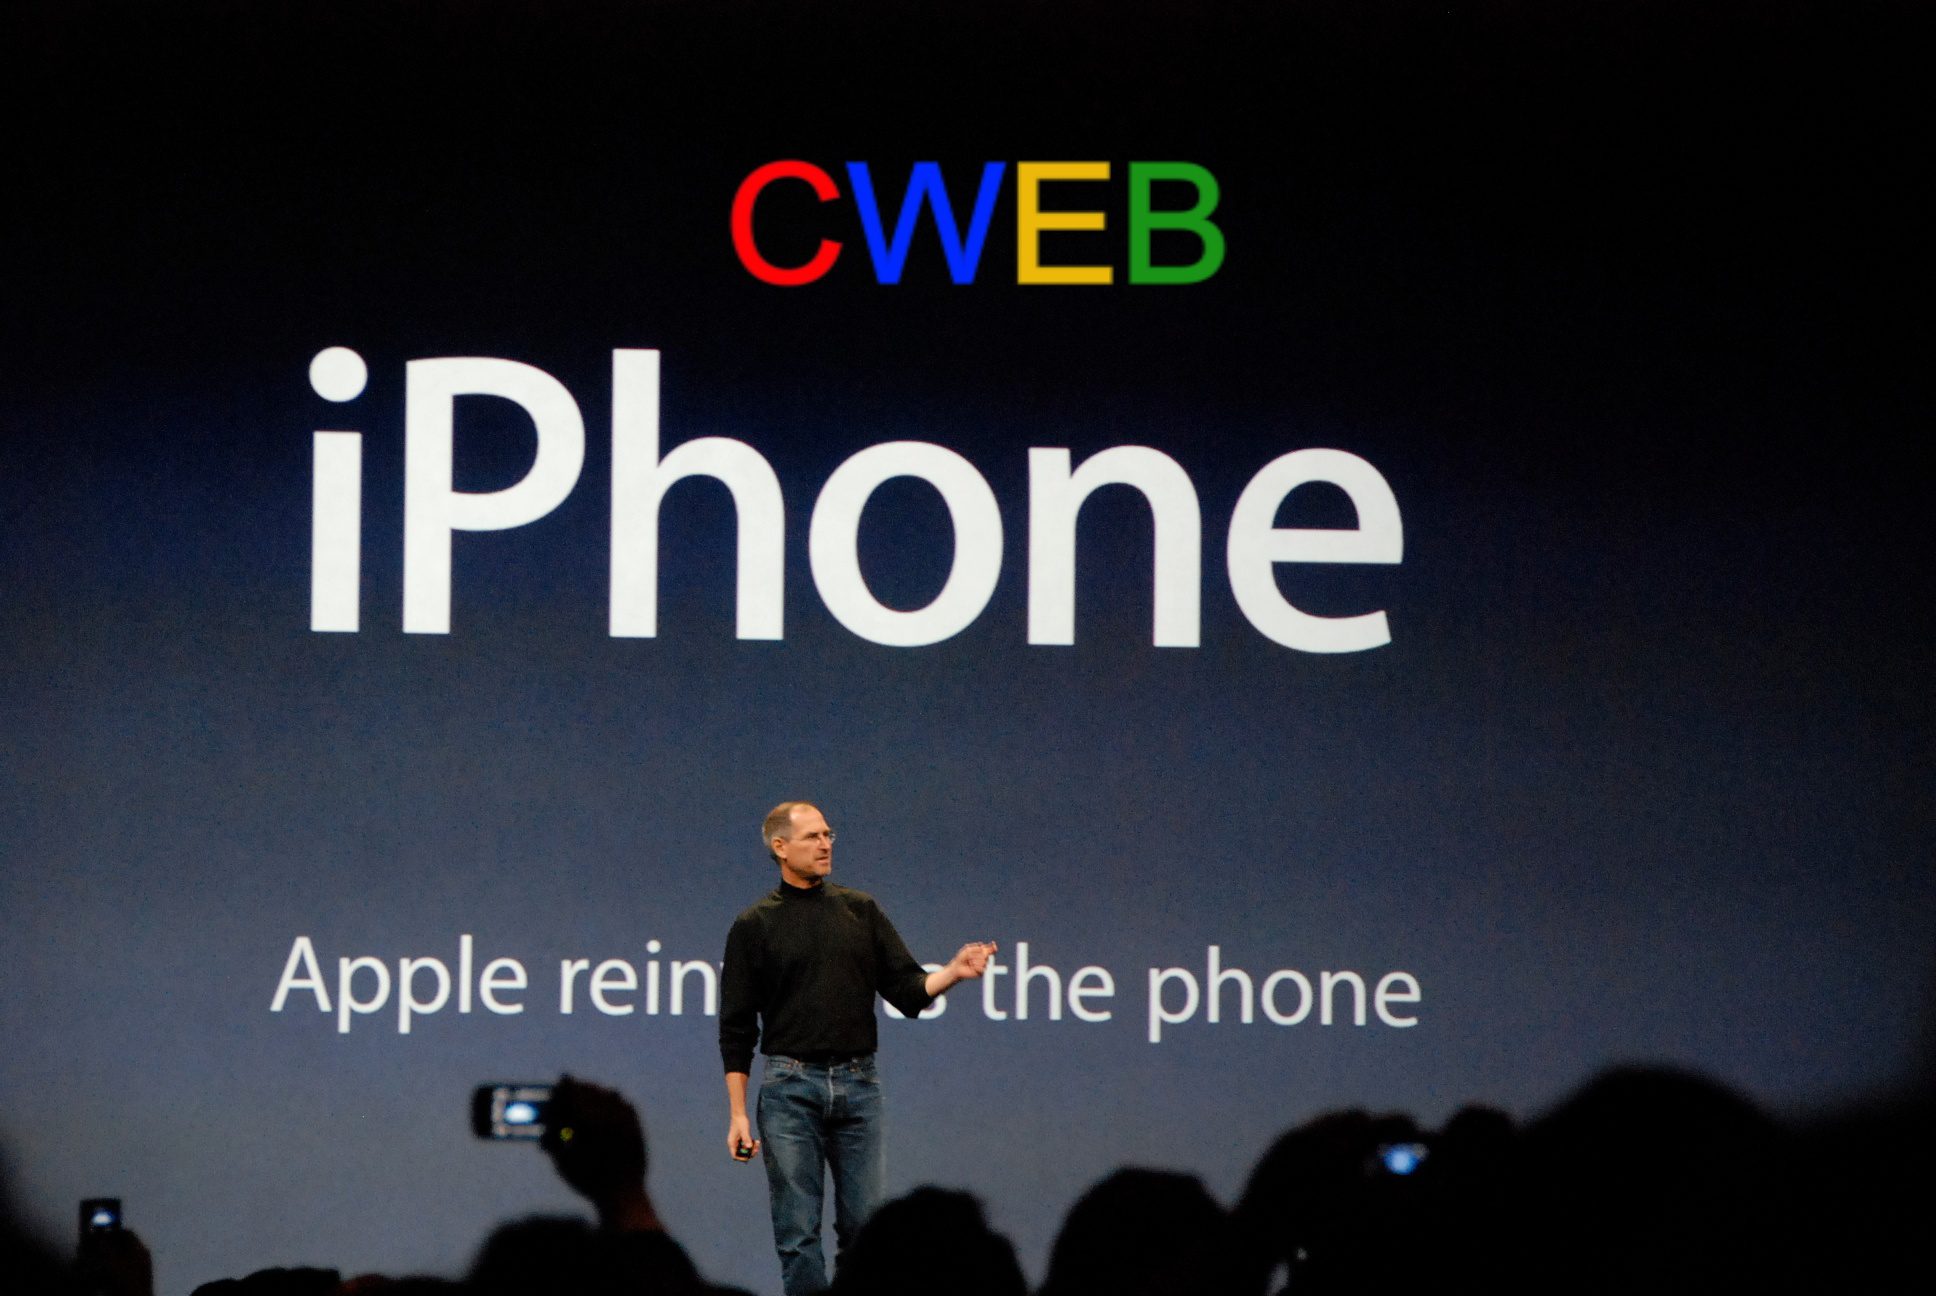 Steve_Jobs_presents_iPhone (1).jpg